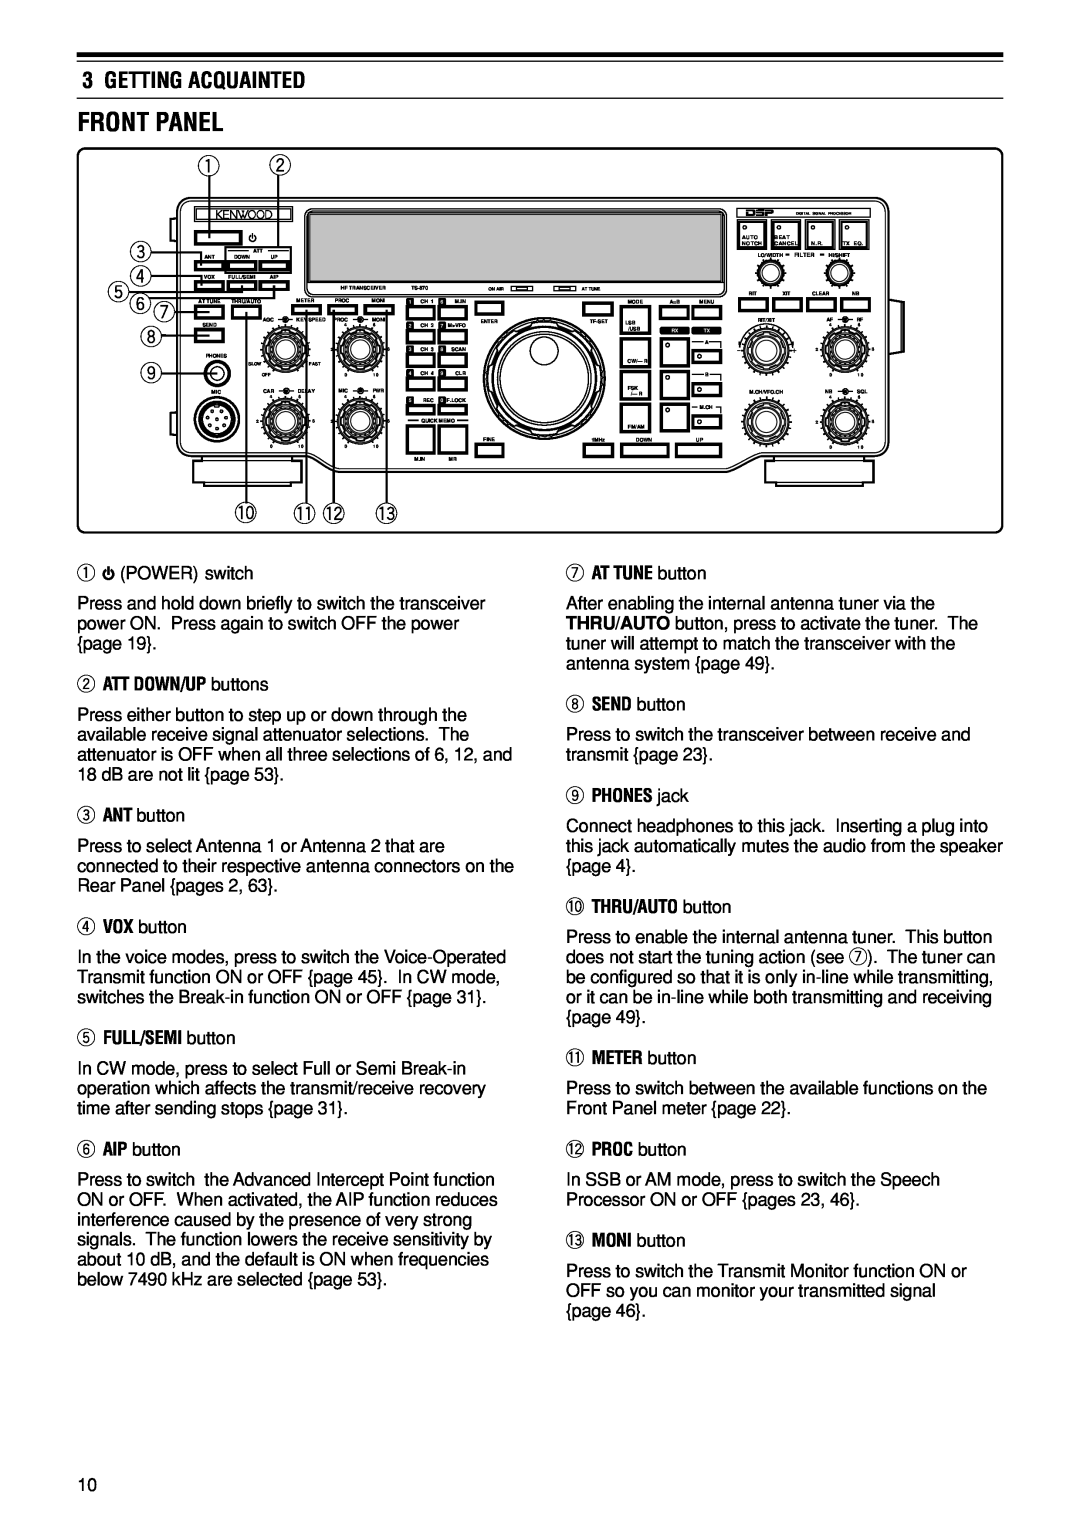 Kenwood TS-870S instruction manual Front Panel, Getting Acquainted, e r ty u i o, 0 !1!2 !3 